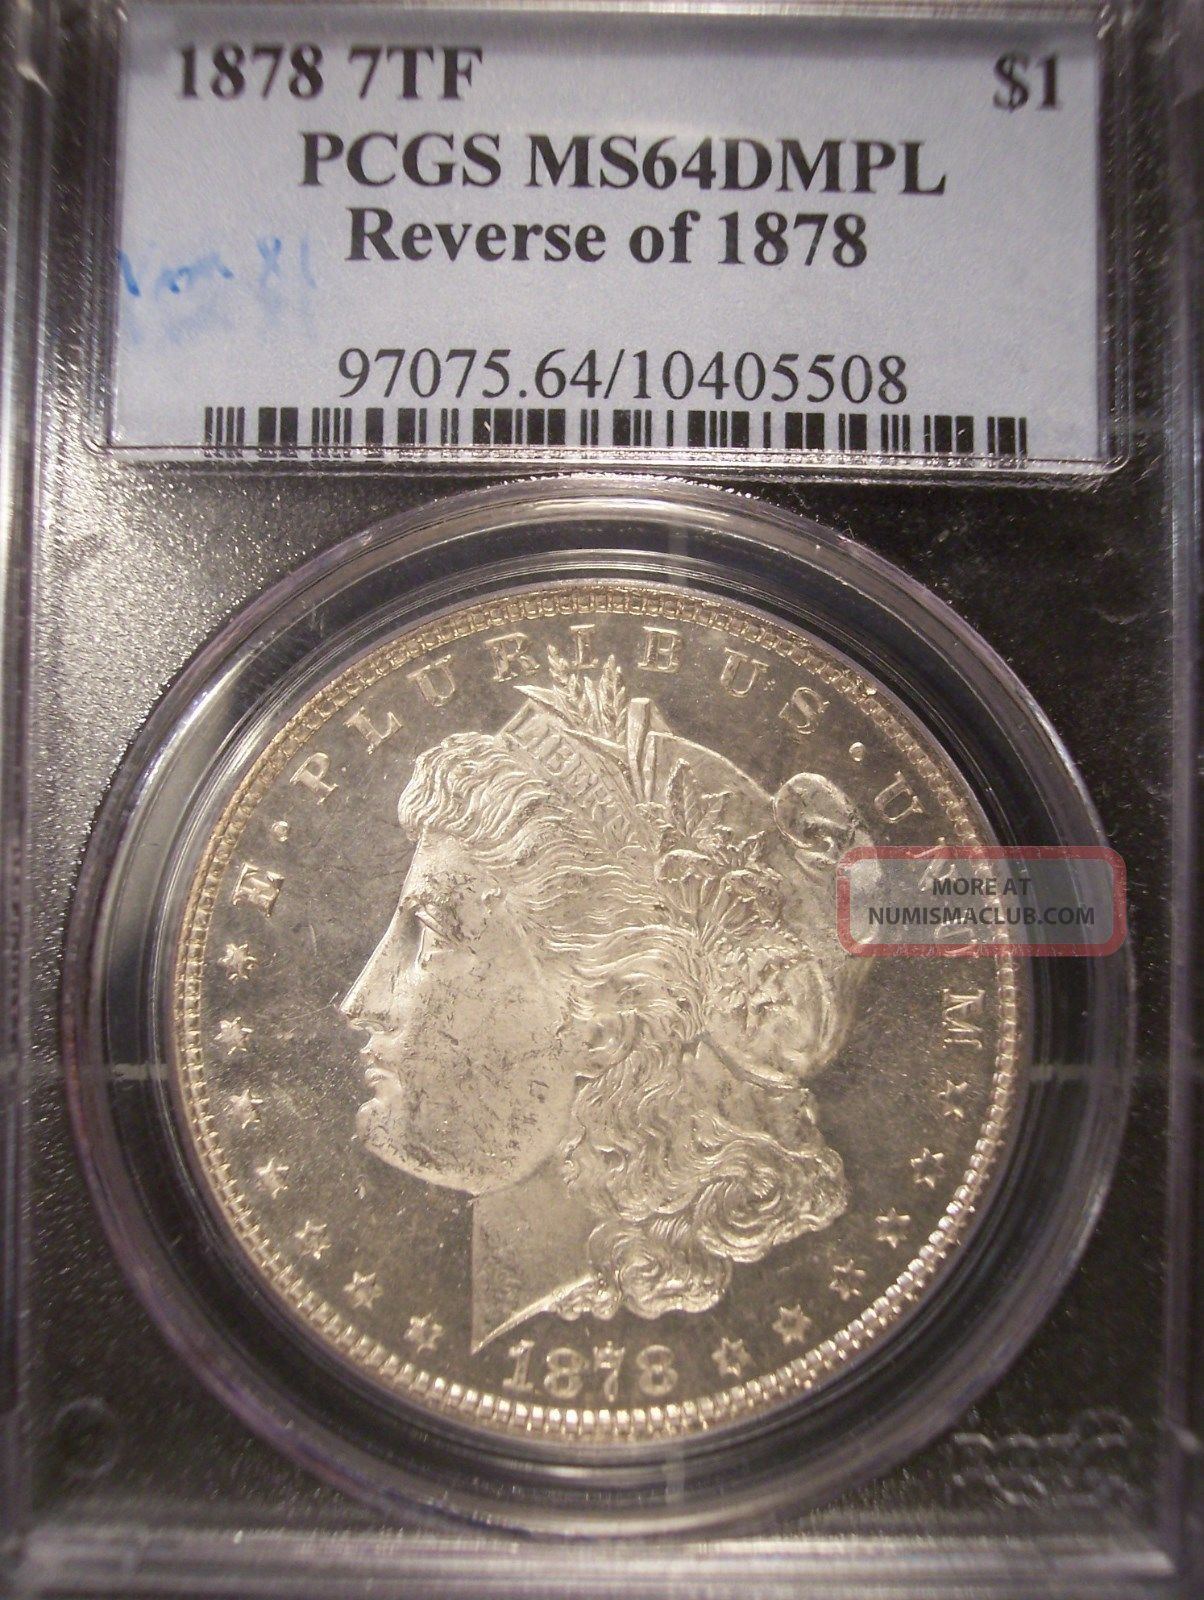 1878 Rev Of 1878 7tf Morgan Silver Dollar Pcgs Ms64dmpl